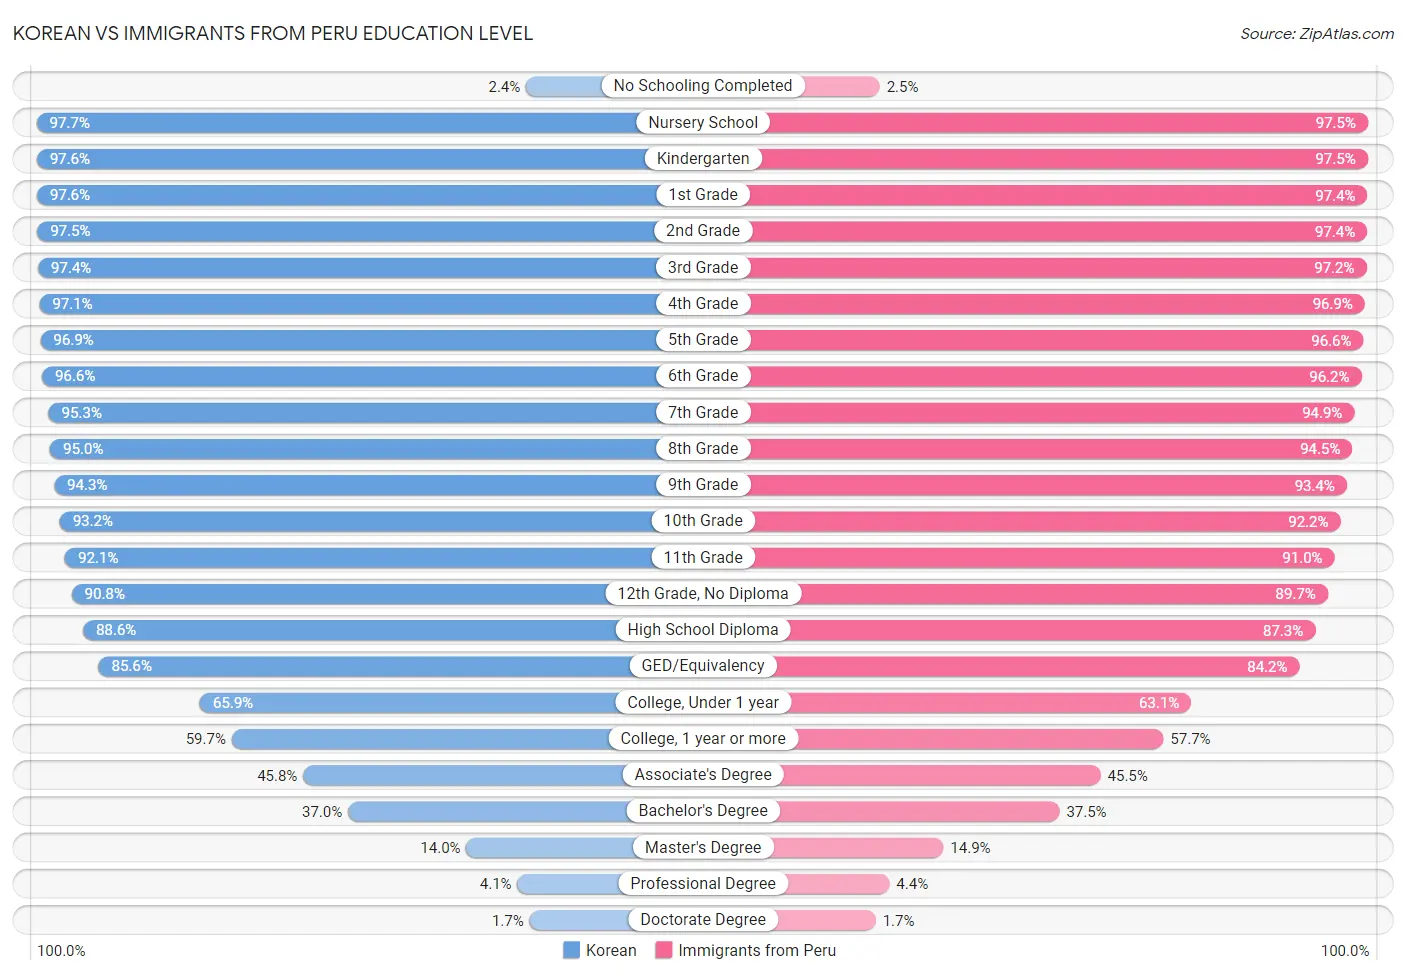 Korean vs Immigrants from Peru Education Level